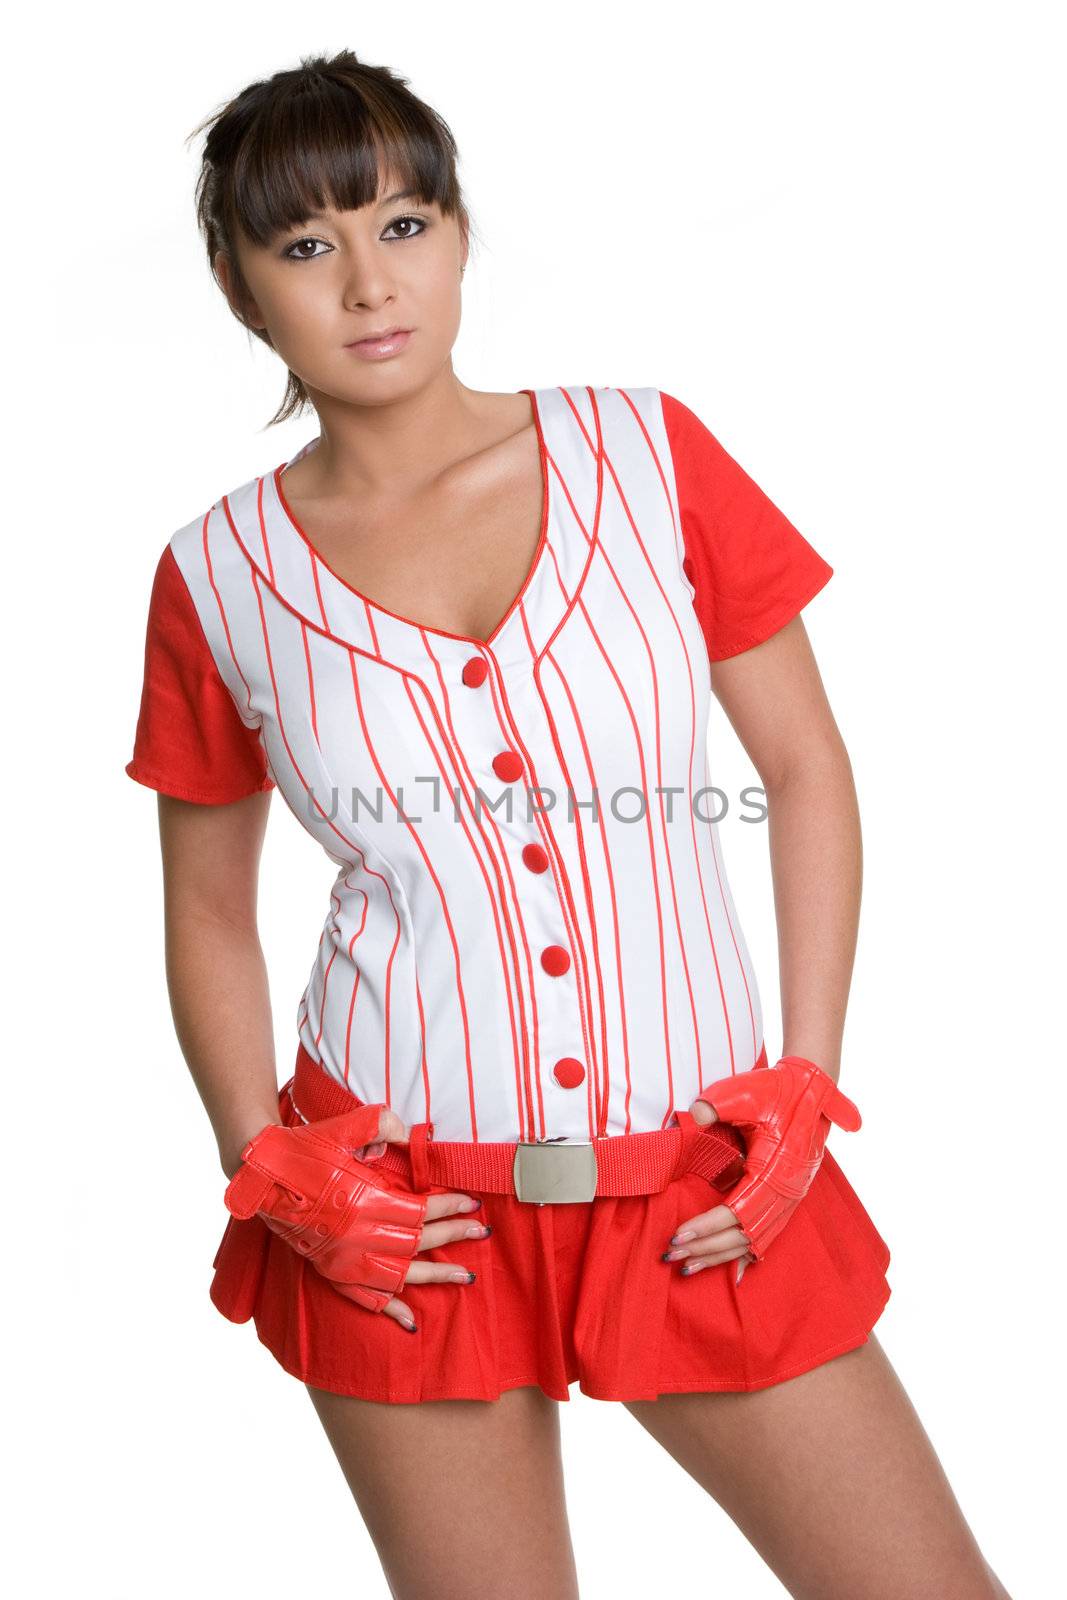 Pretty woman wearing baseball uniform